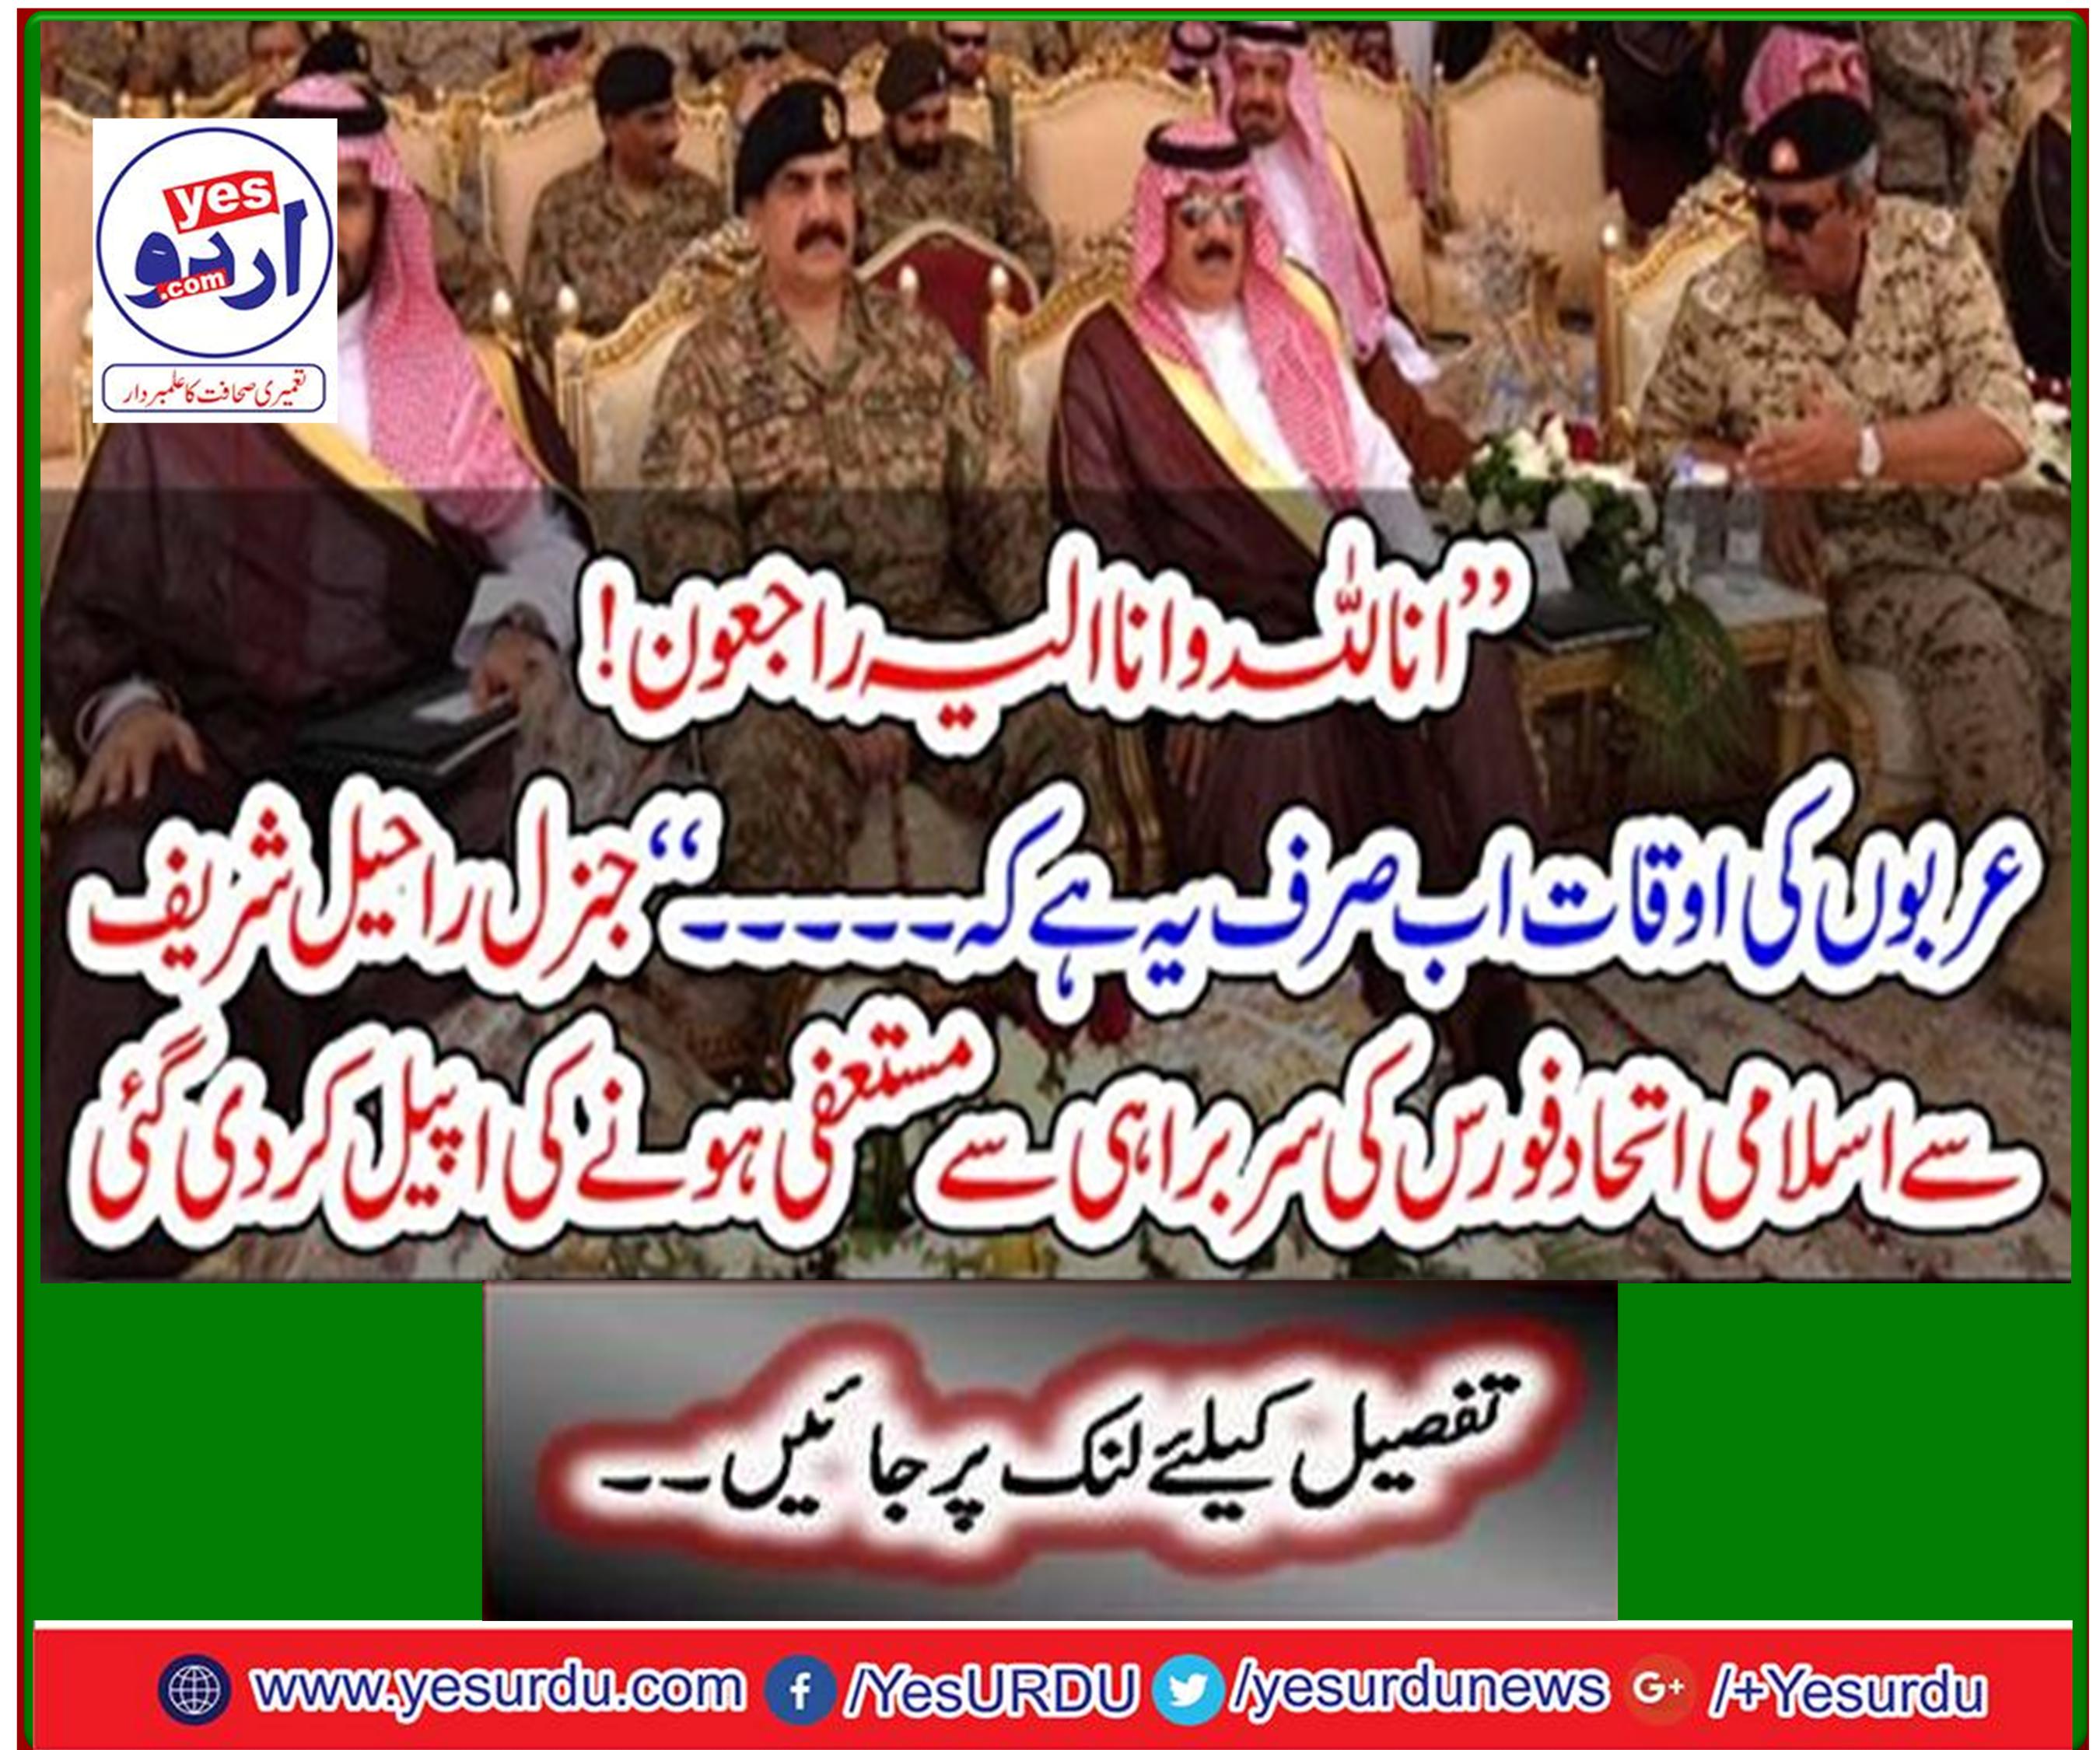 General Raheel Sharif appealed to resign under the leadership of Islamic Unity Force